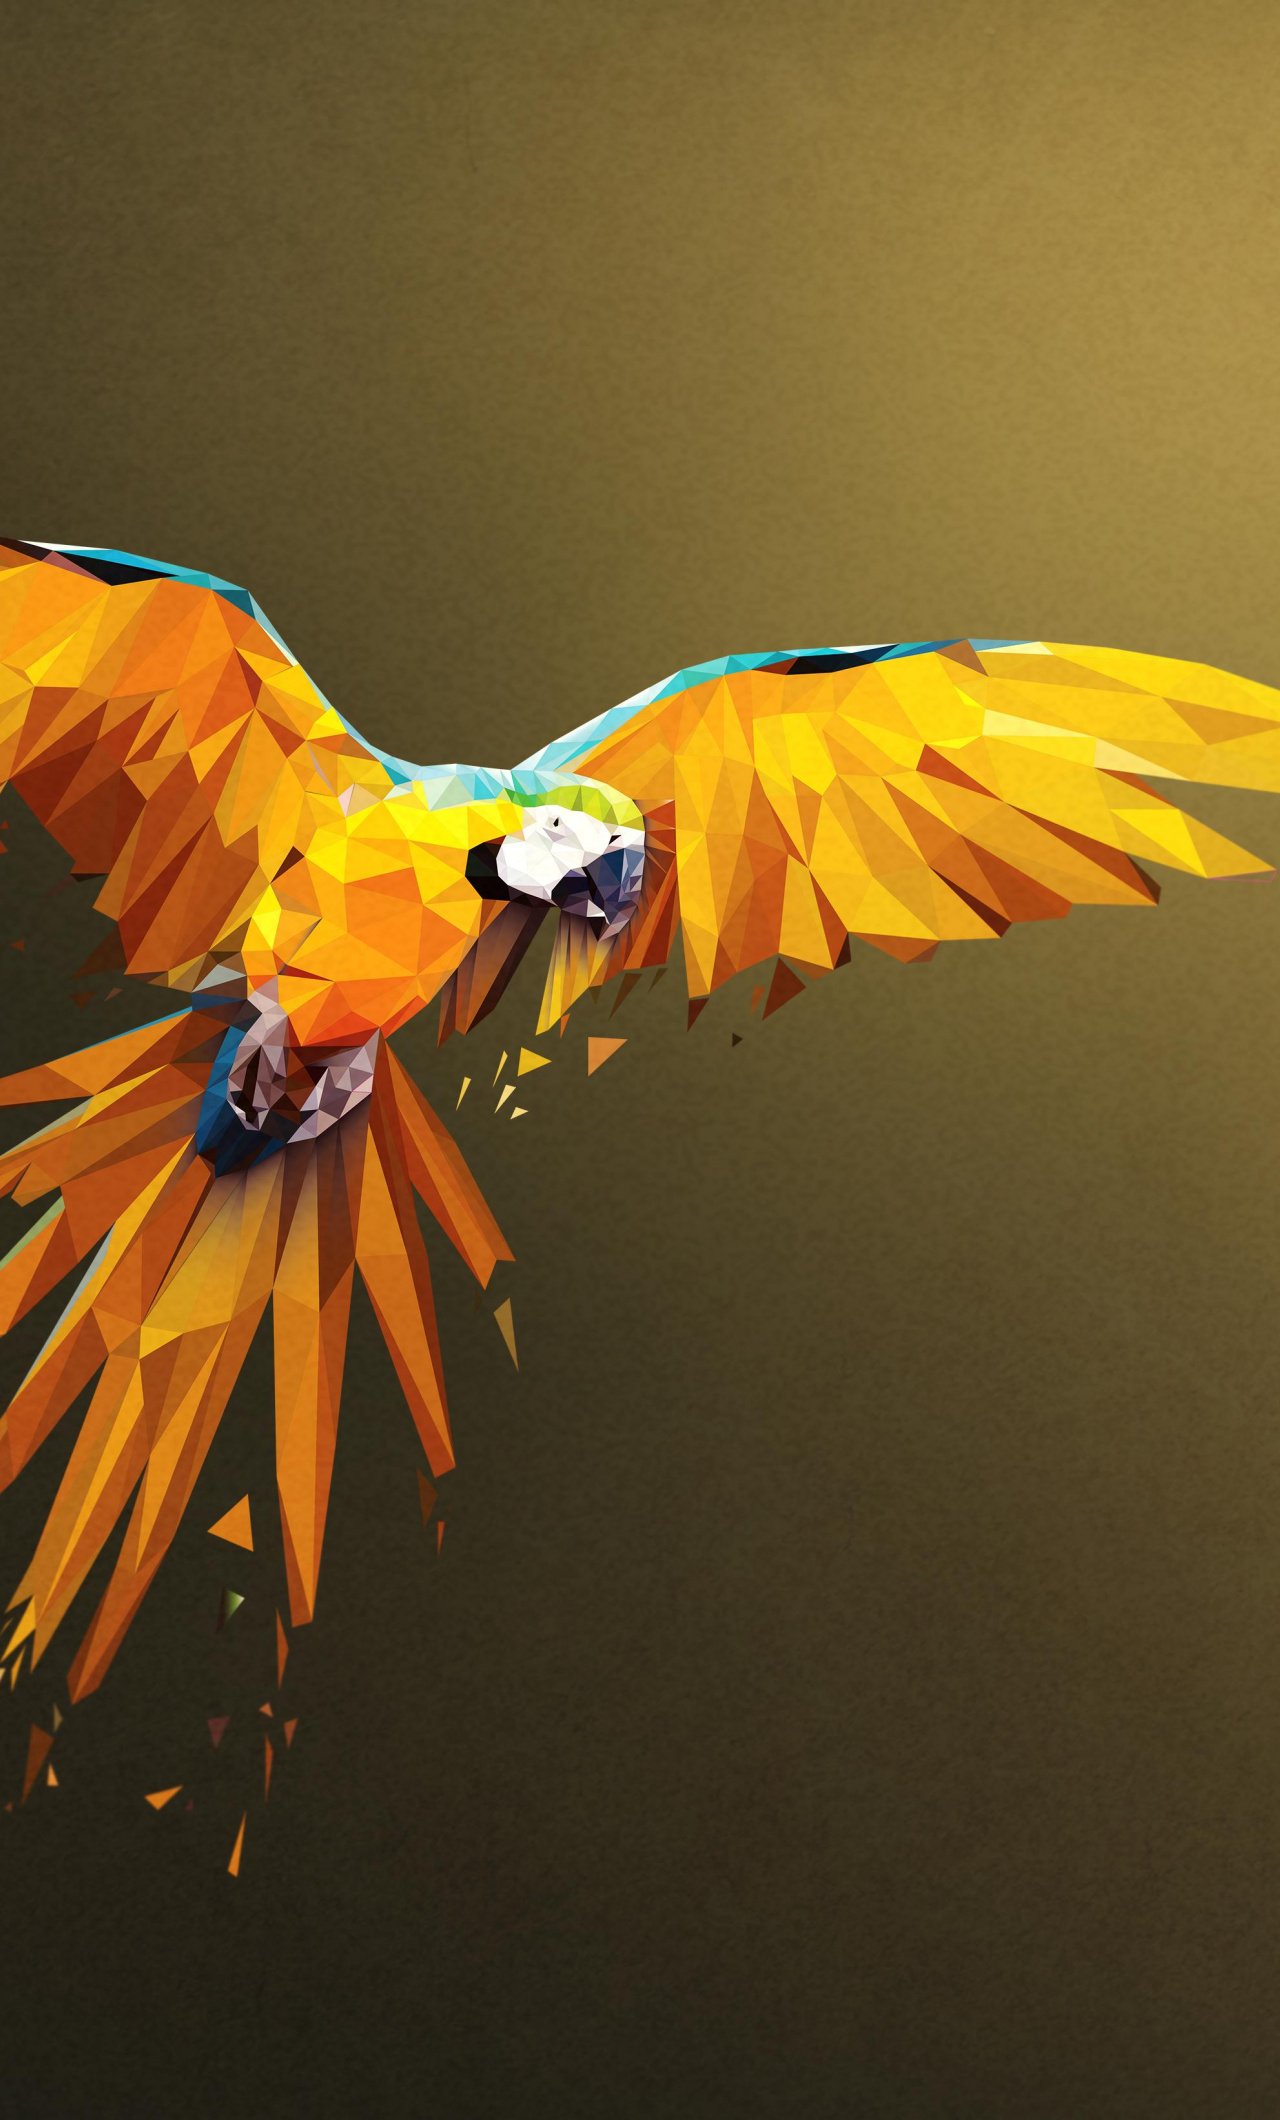 Download Macaw flight low poly art wallpaper 1280x2120 iPhone